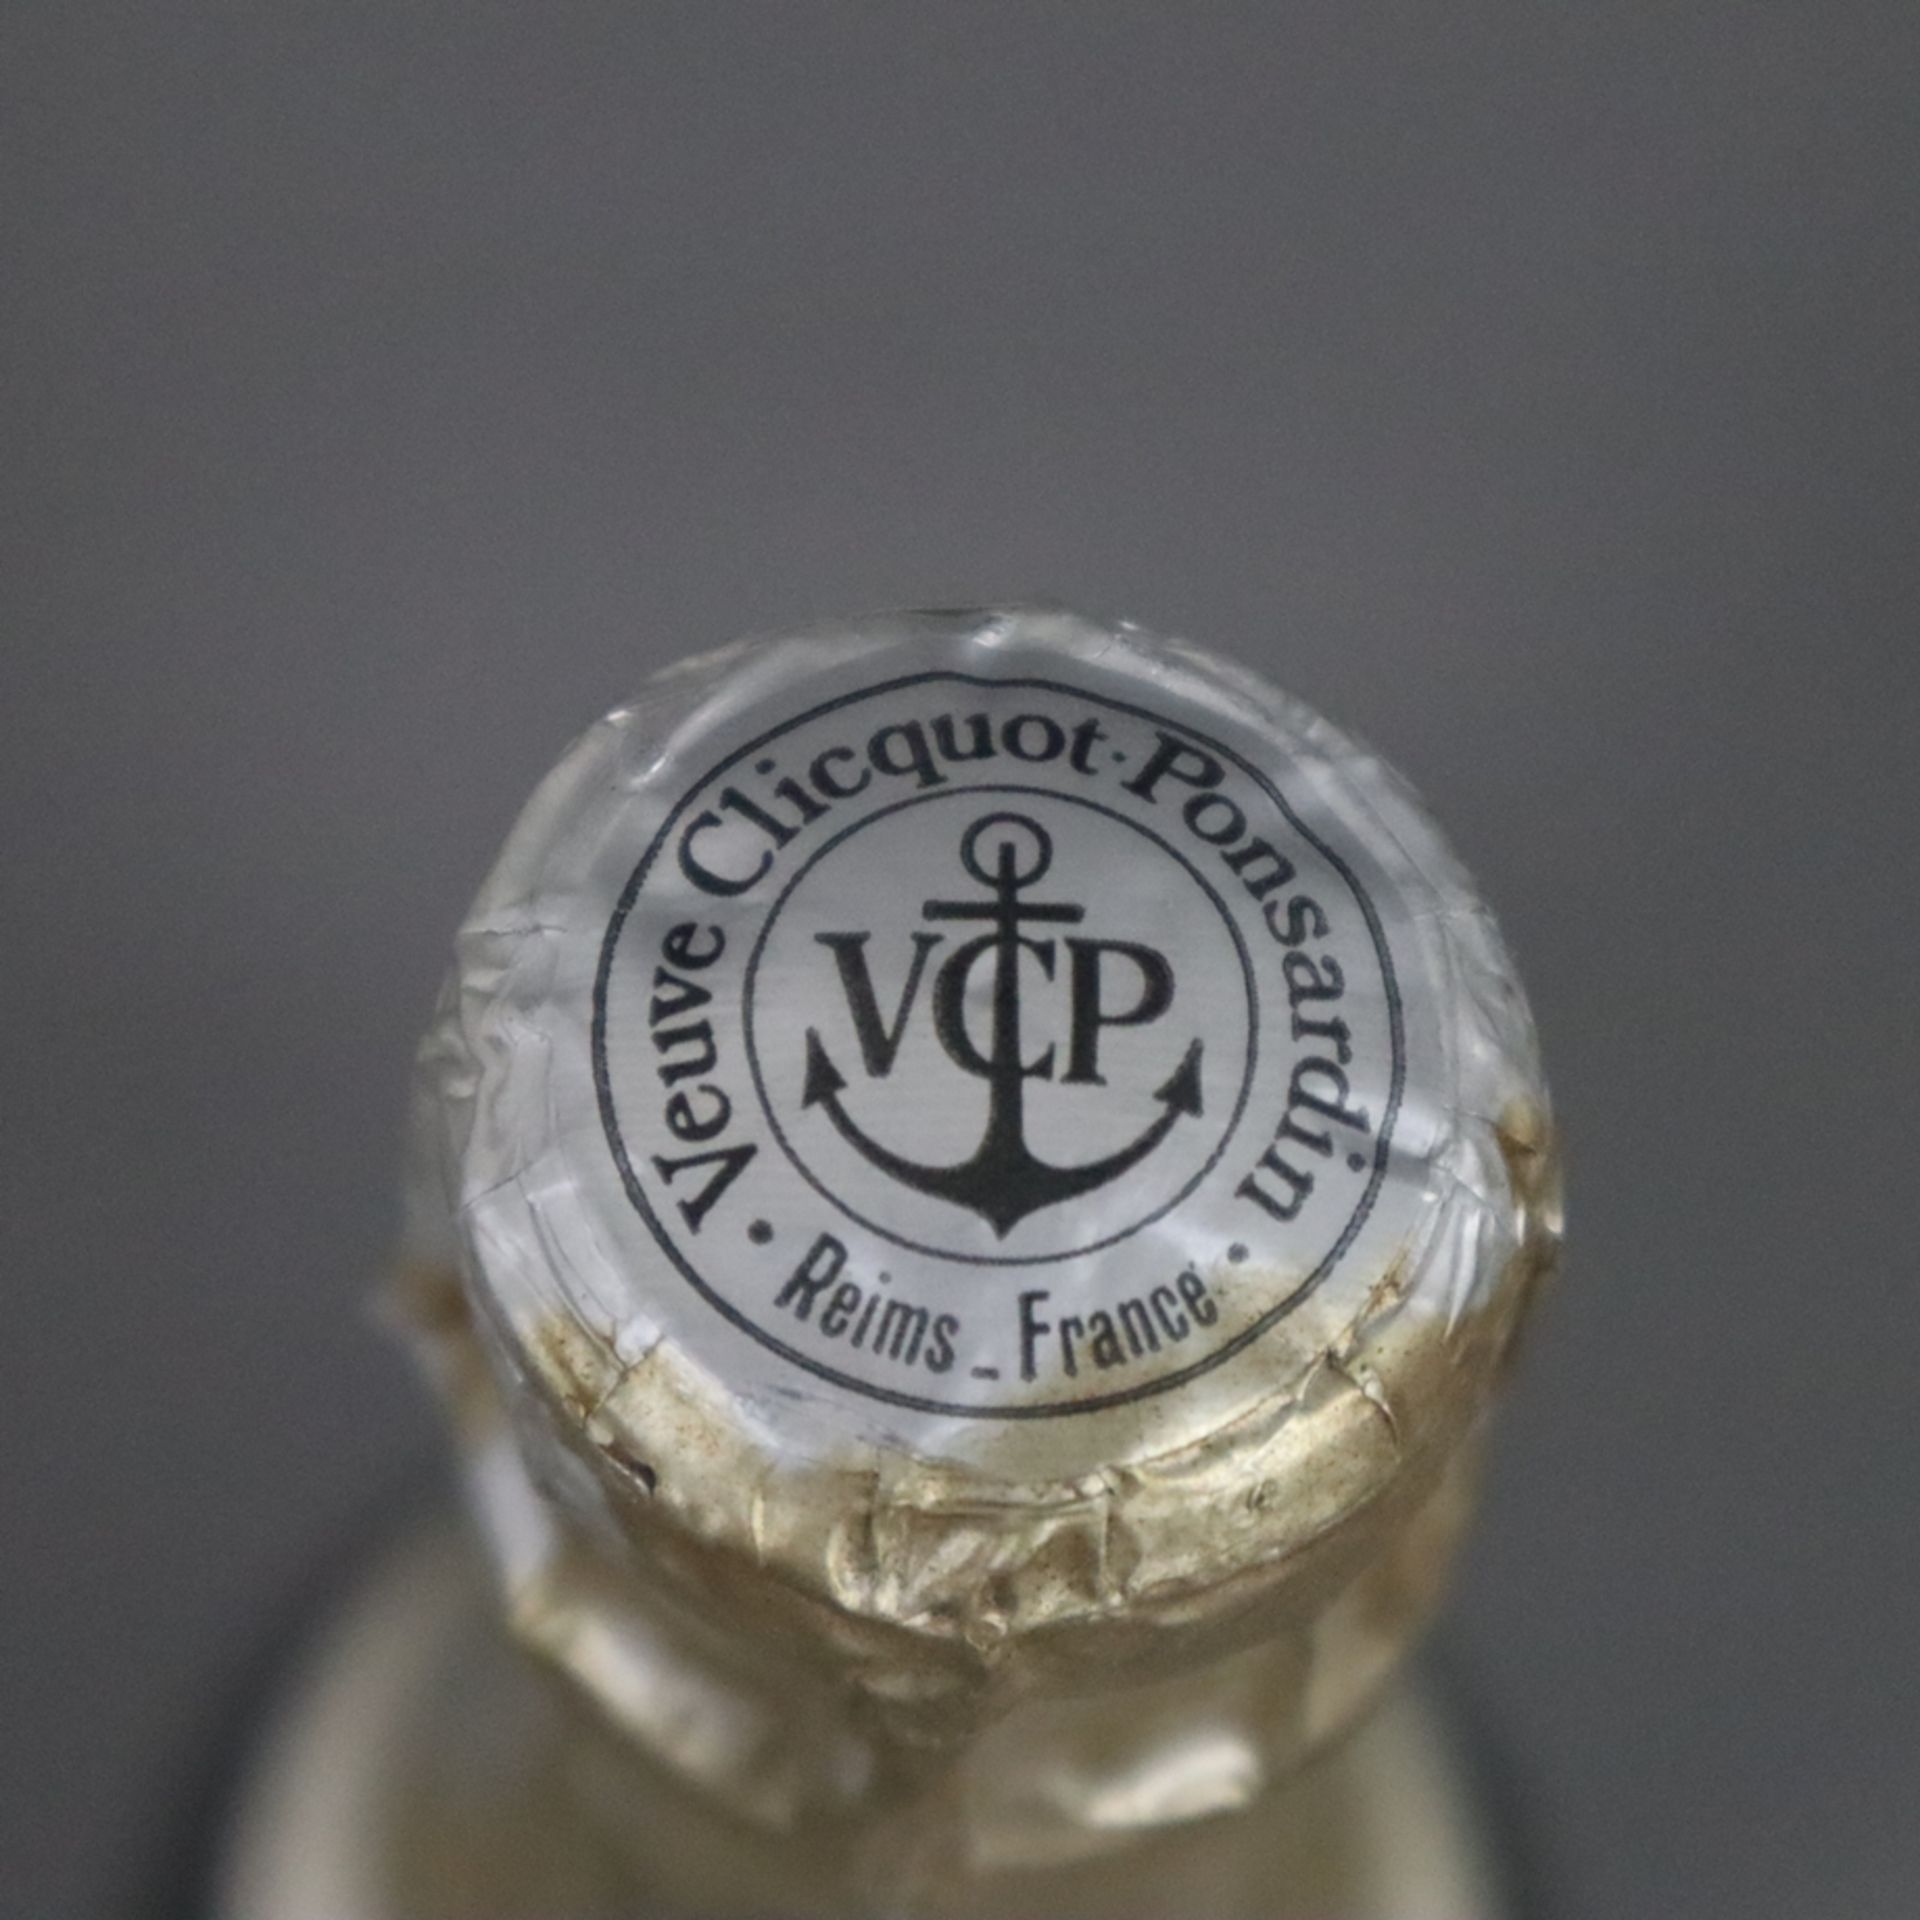 Champagner - Veuve Clicquot Ponsardin Bicentenaire 1772-1972 Brut, Reims, France, 750ml, Flasche ve - Bild 4 aus 5